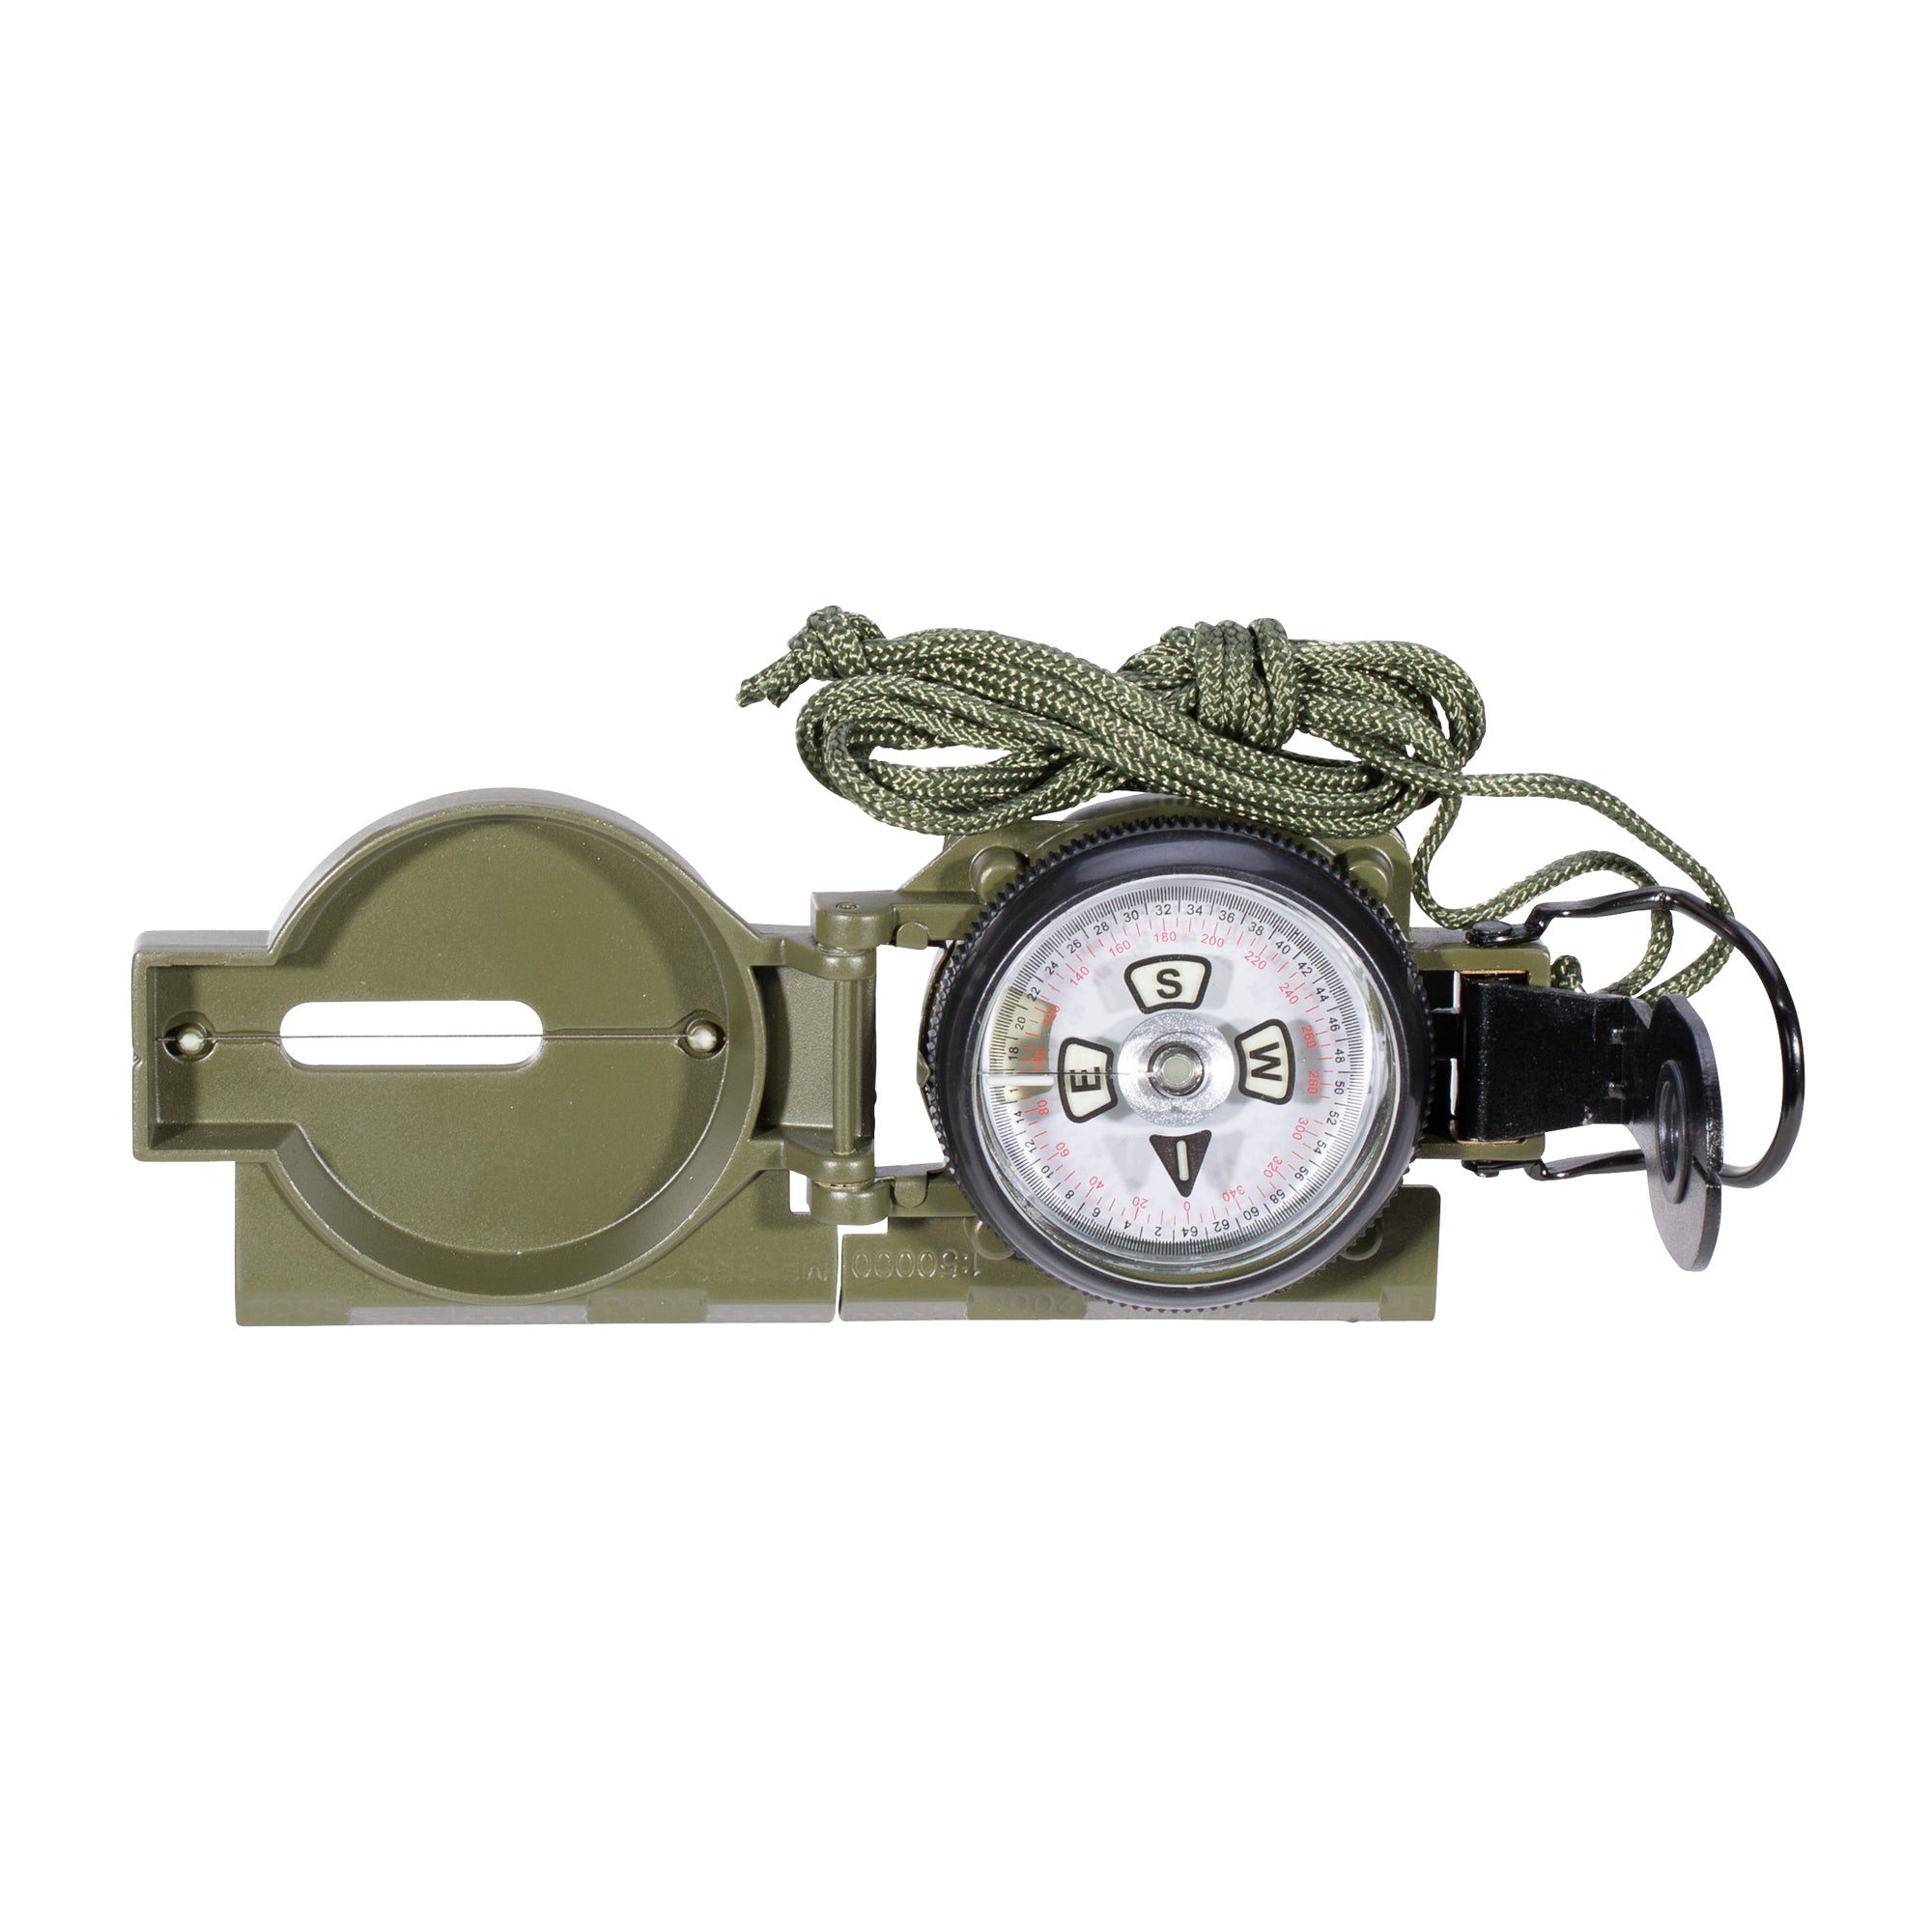 US Kompass Ranger Metallgehäuse oliv